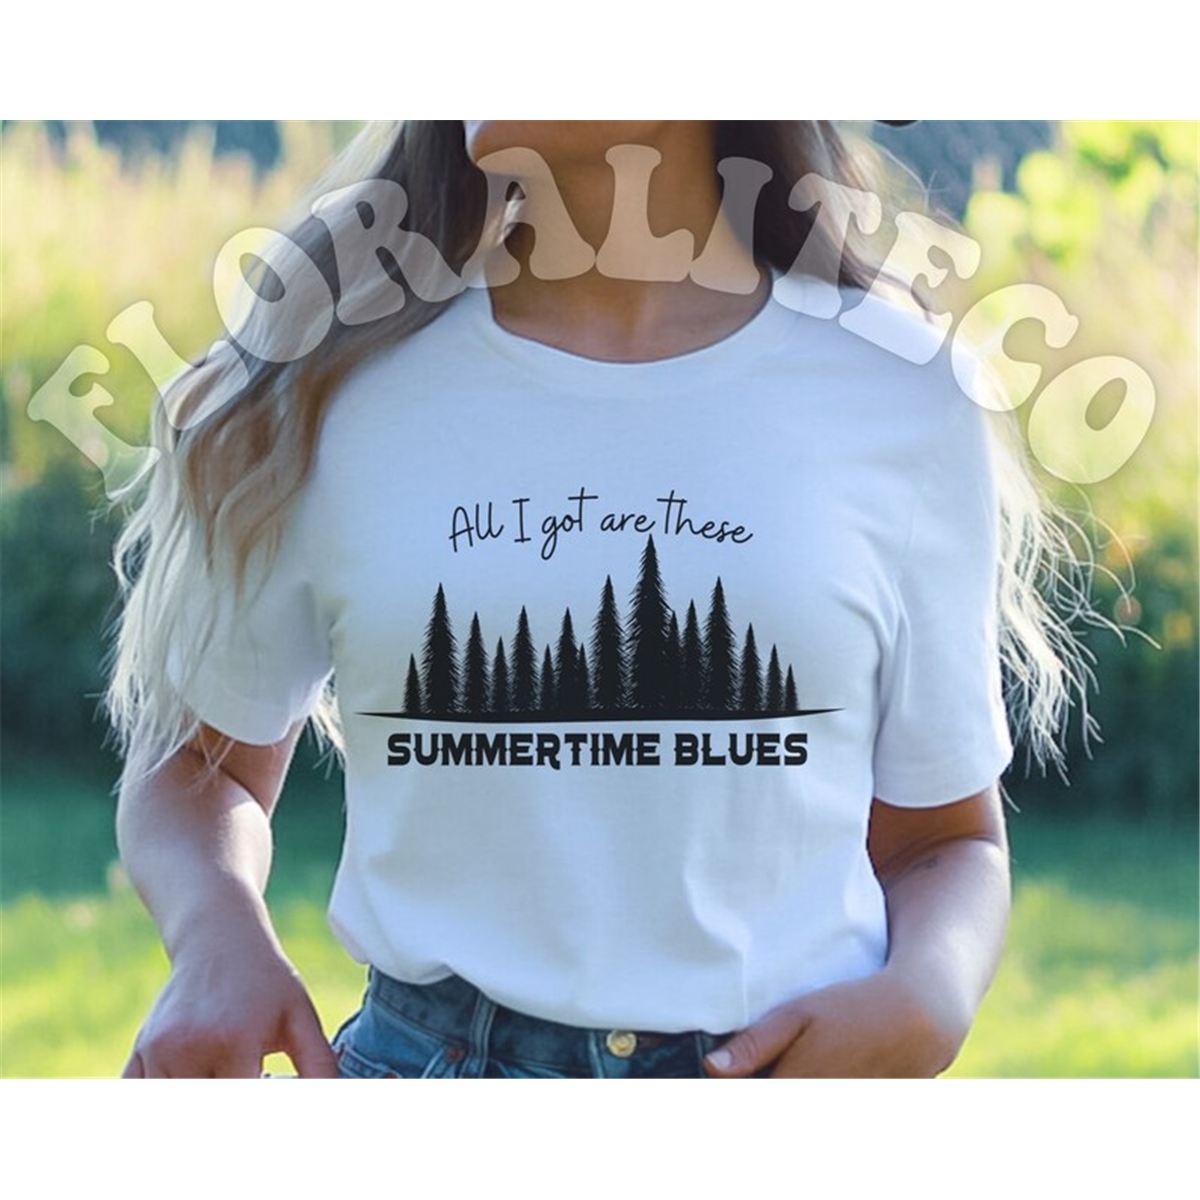 cowboy-shirt-svg-bryan-svg-bryan-png-summertime-blues-svg-image-1